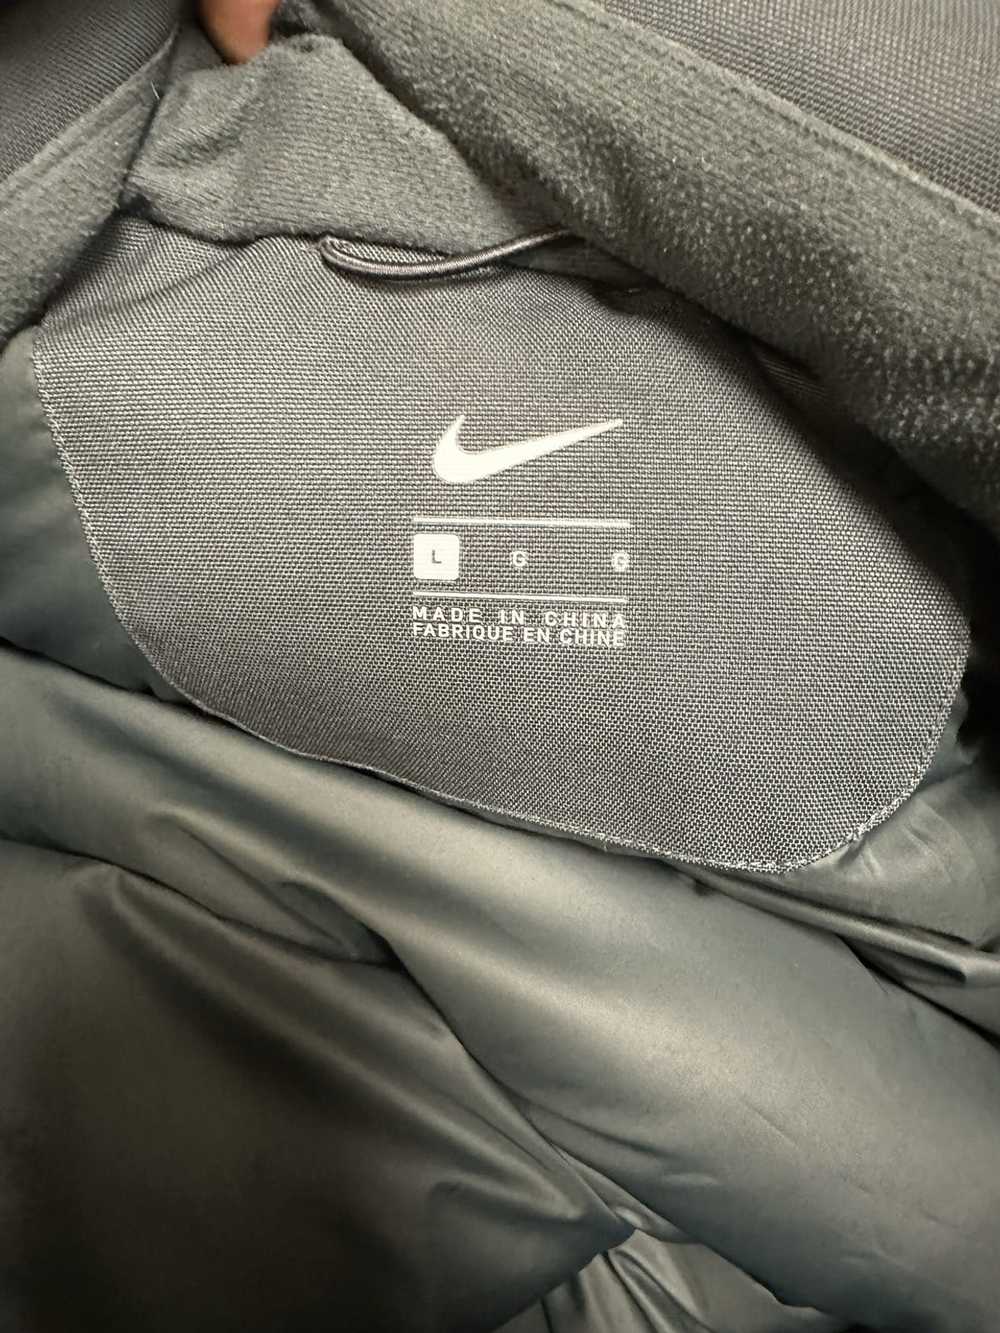 Nike Nike Down Fill NBA All Star Parka Jacket - image 5